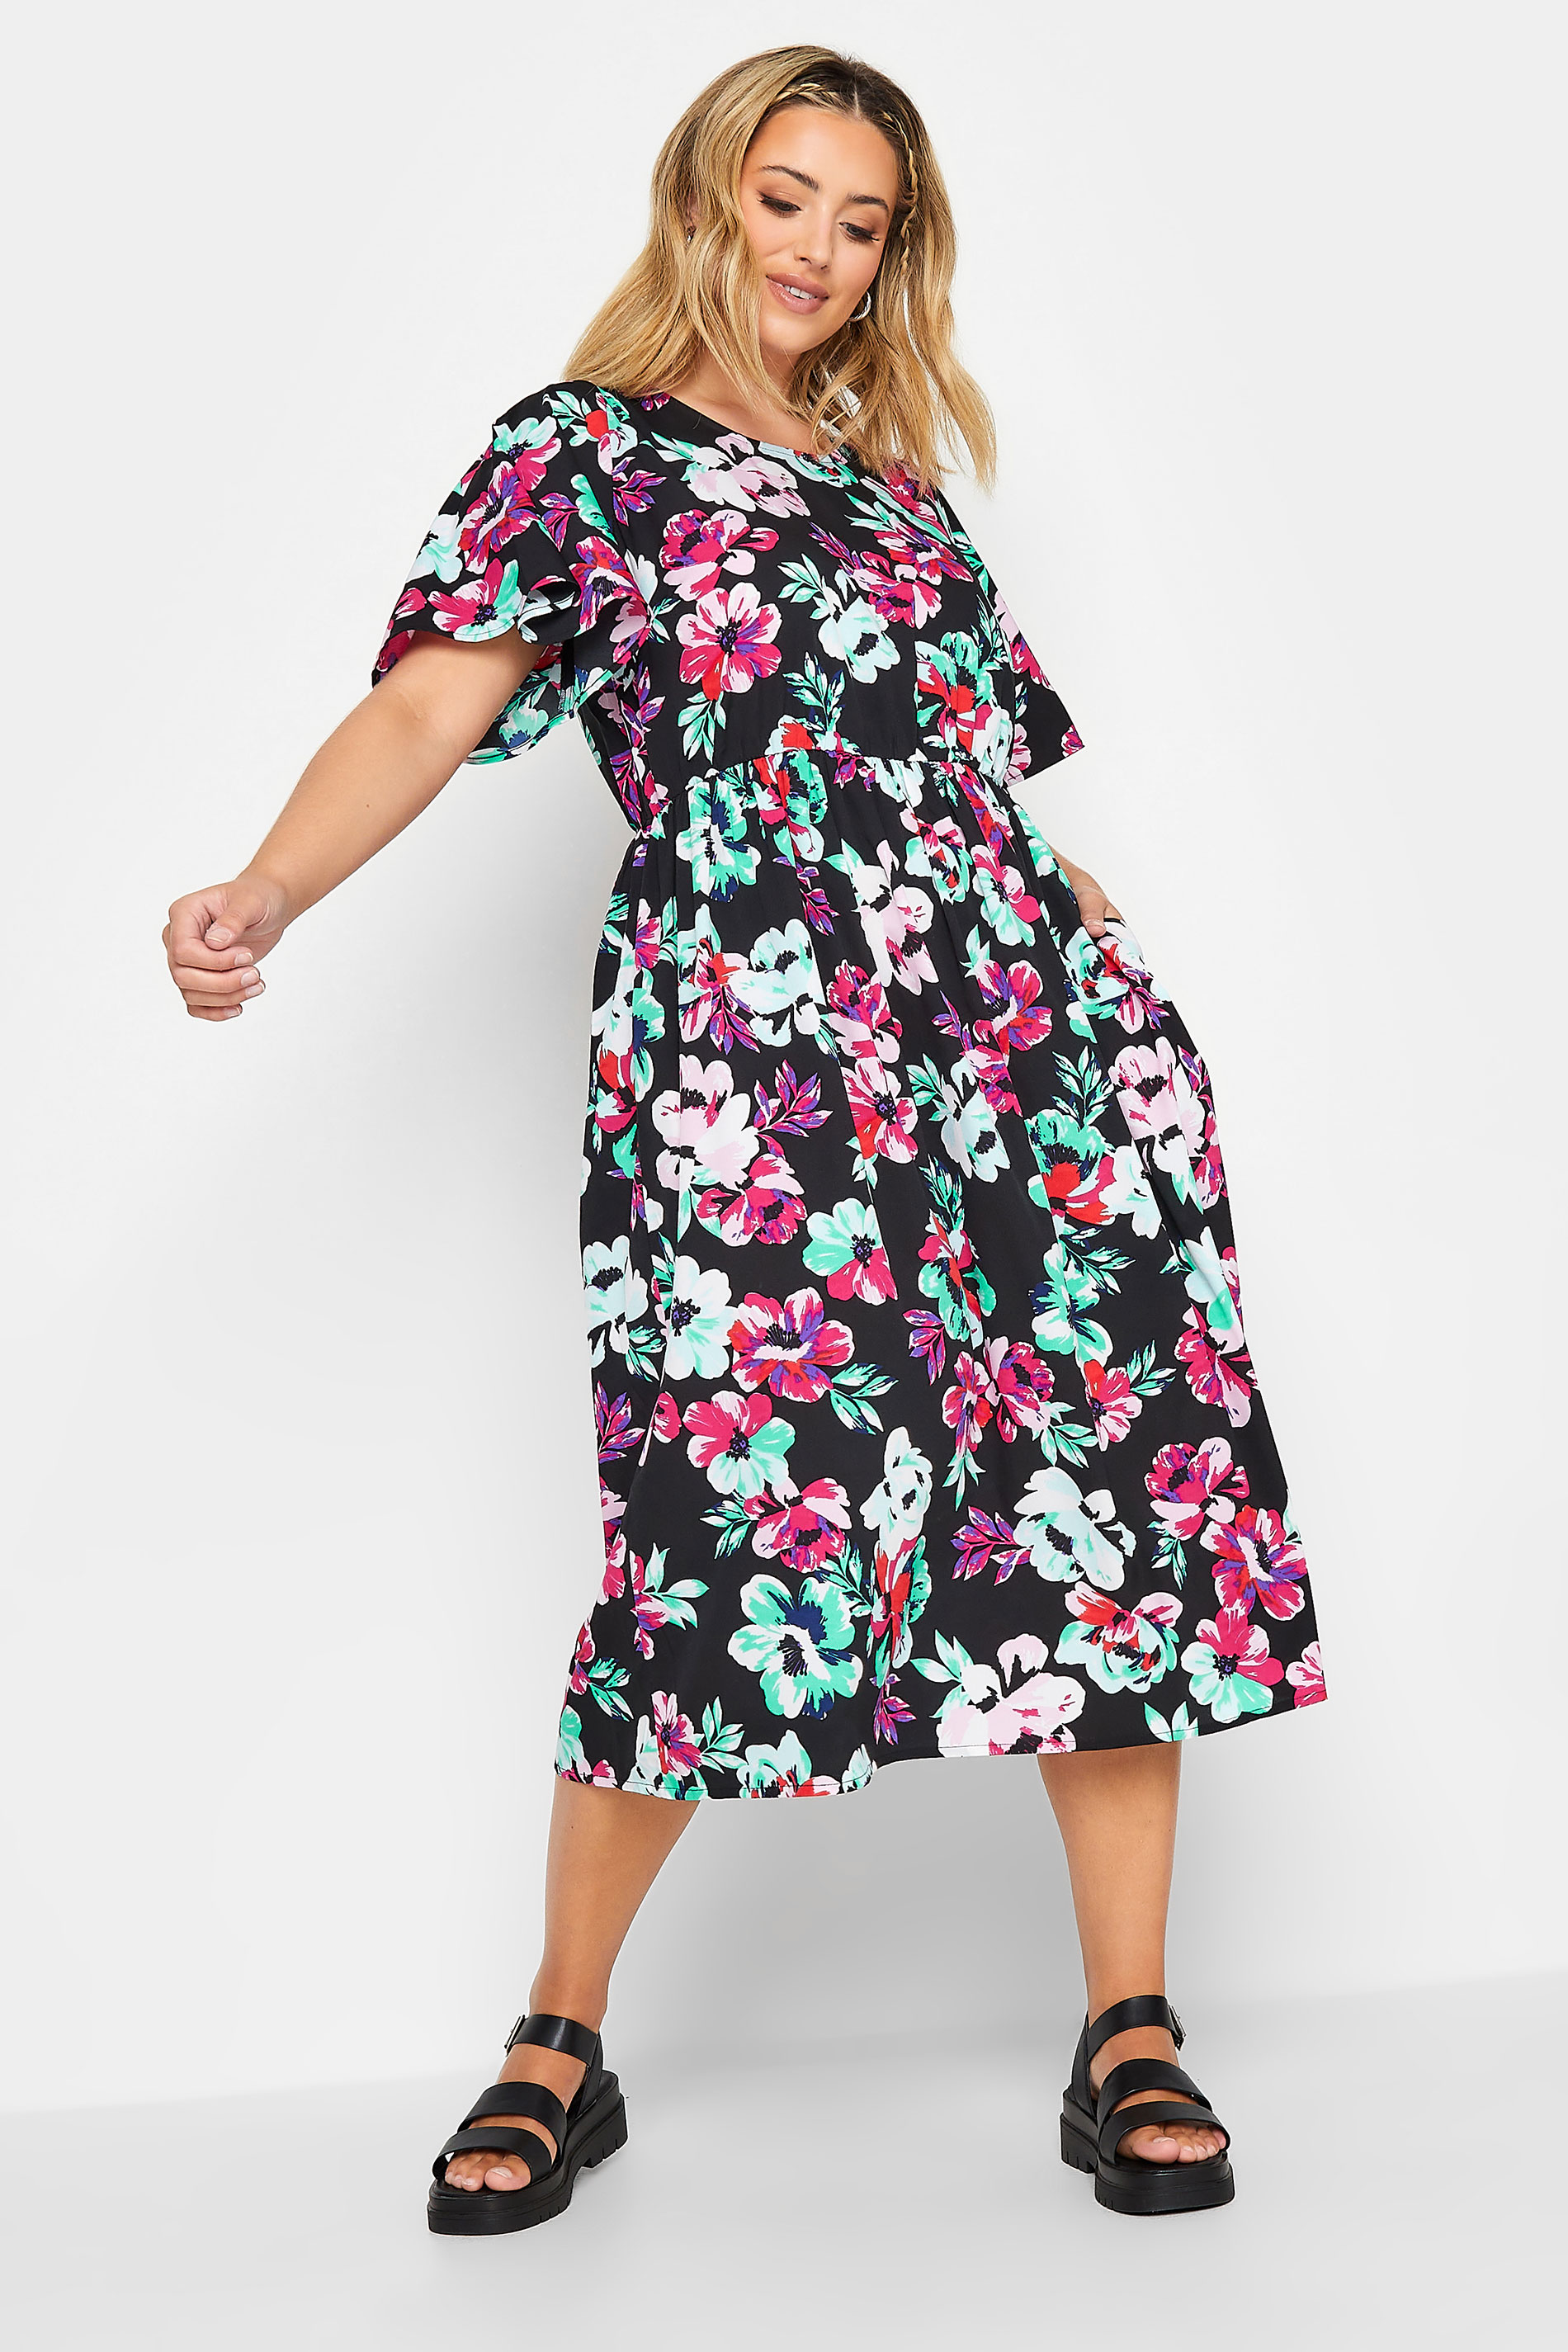 YOURS Plus Size Black Floral Print Midi Tea Dress | Yours Clothing 2